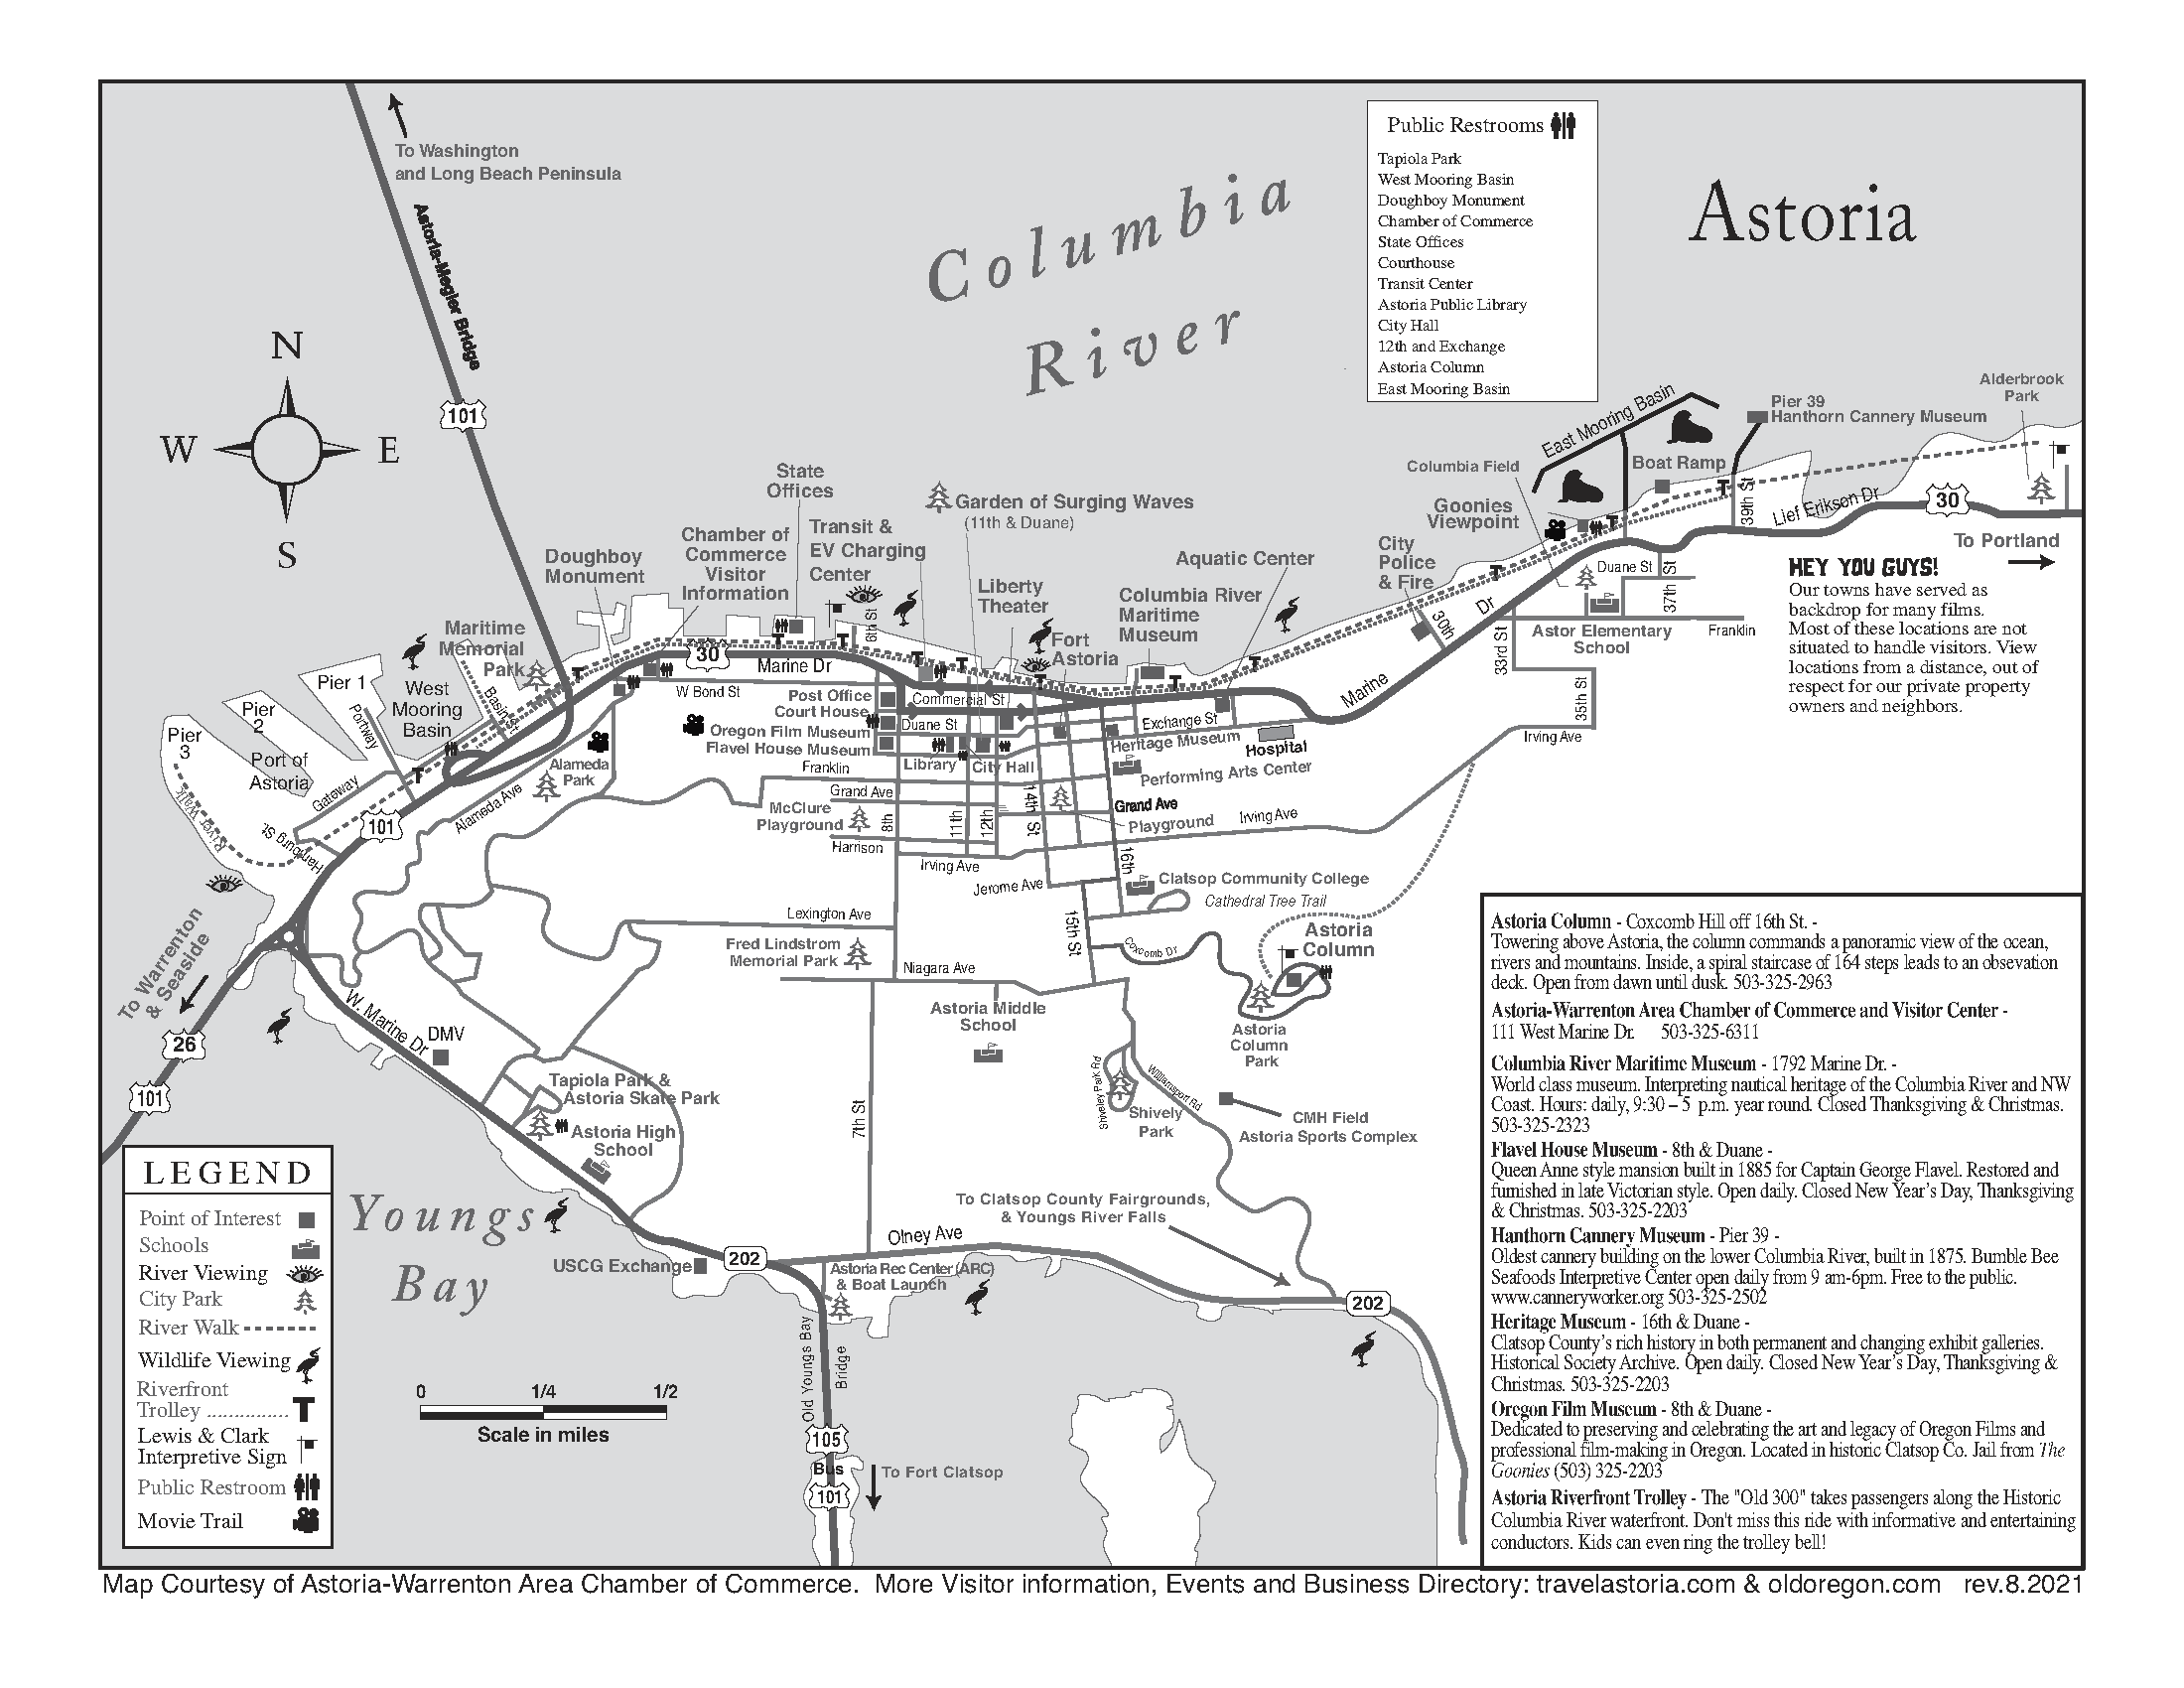 804 21 Astoria Map 1 